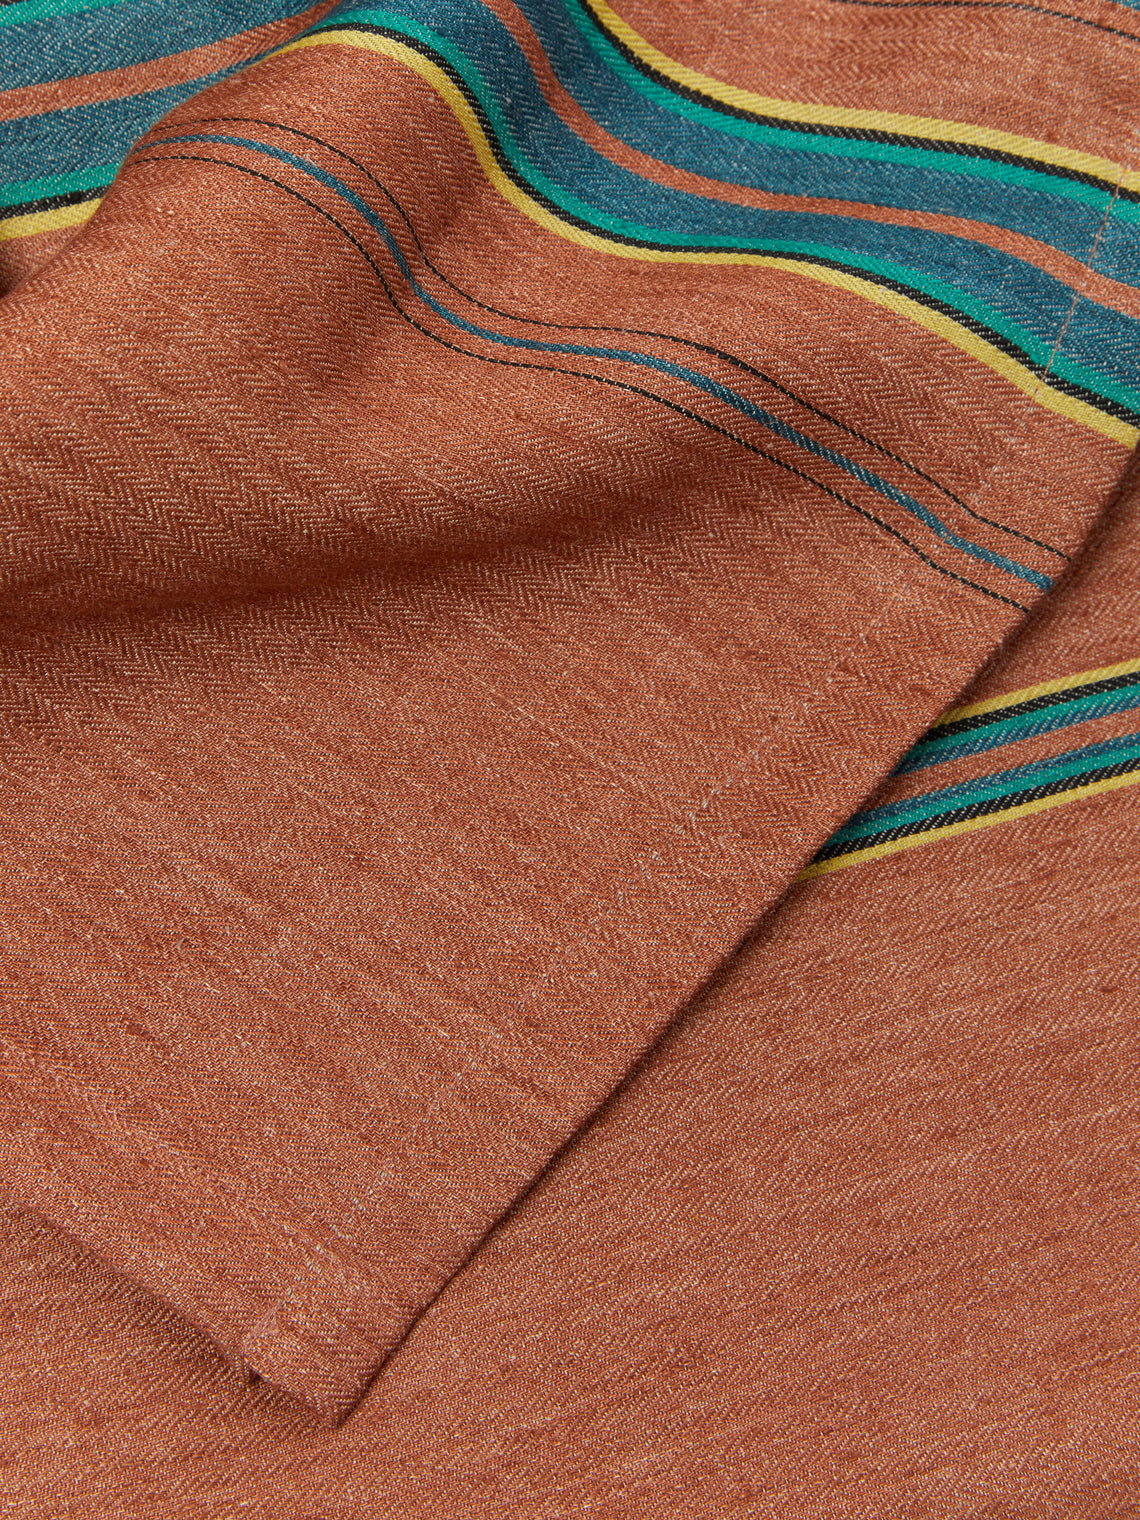 Libeco - Ontario Stripe Belgian Linen Square Tablecloth -  - ABASK